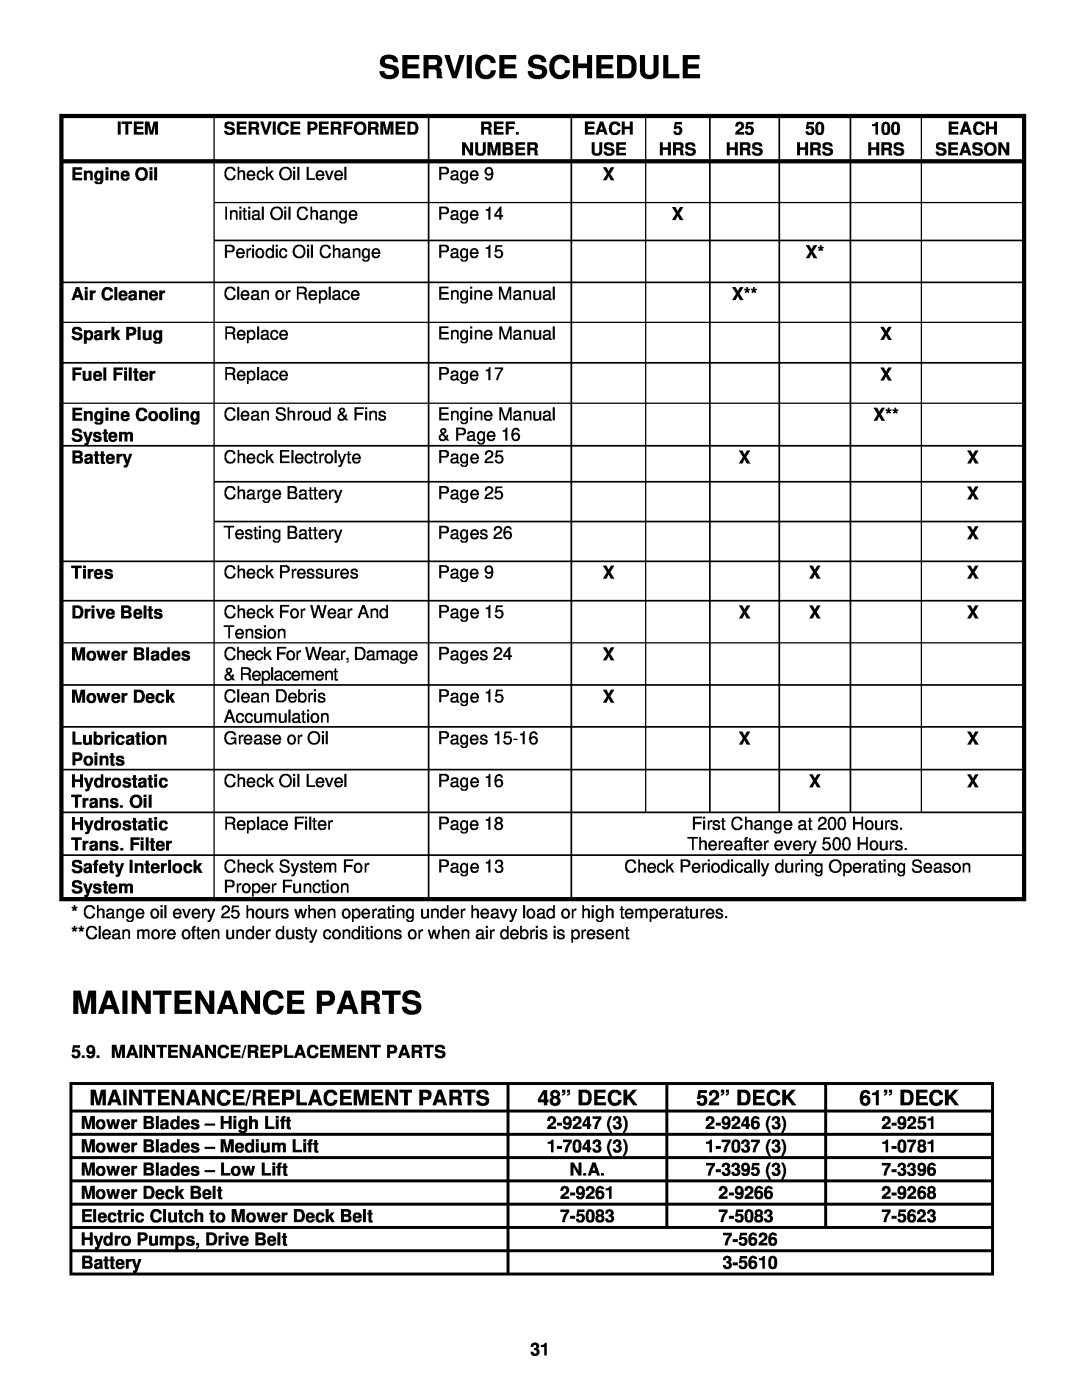 Snapper NZM19481KWV Service Schedule, Maintenance Parts, Maintenance/Replacement Parts, 48” DECK, 52” DECK, 61” DECK 